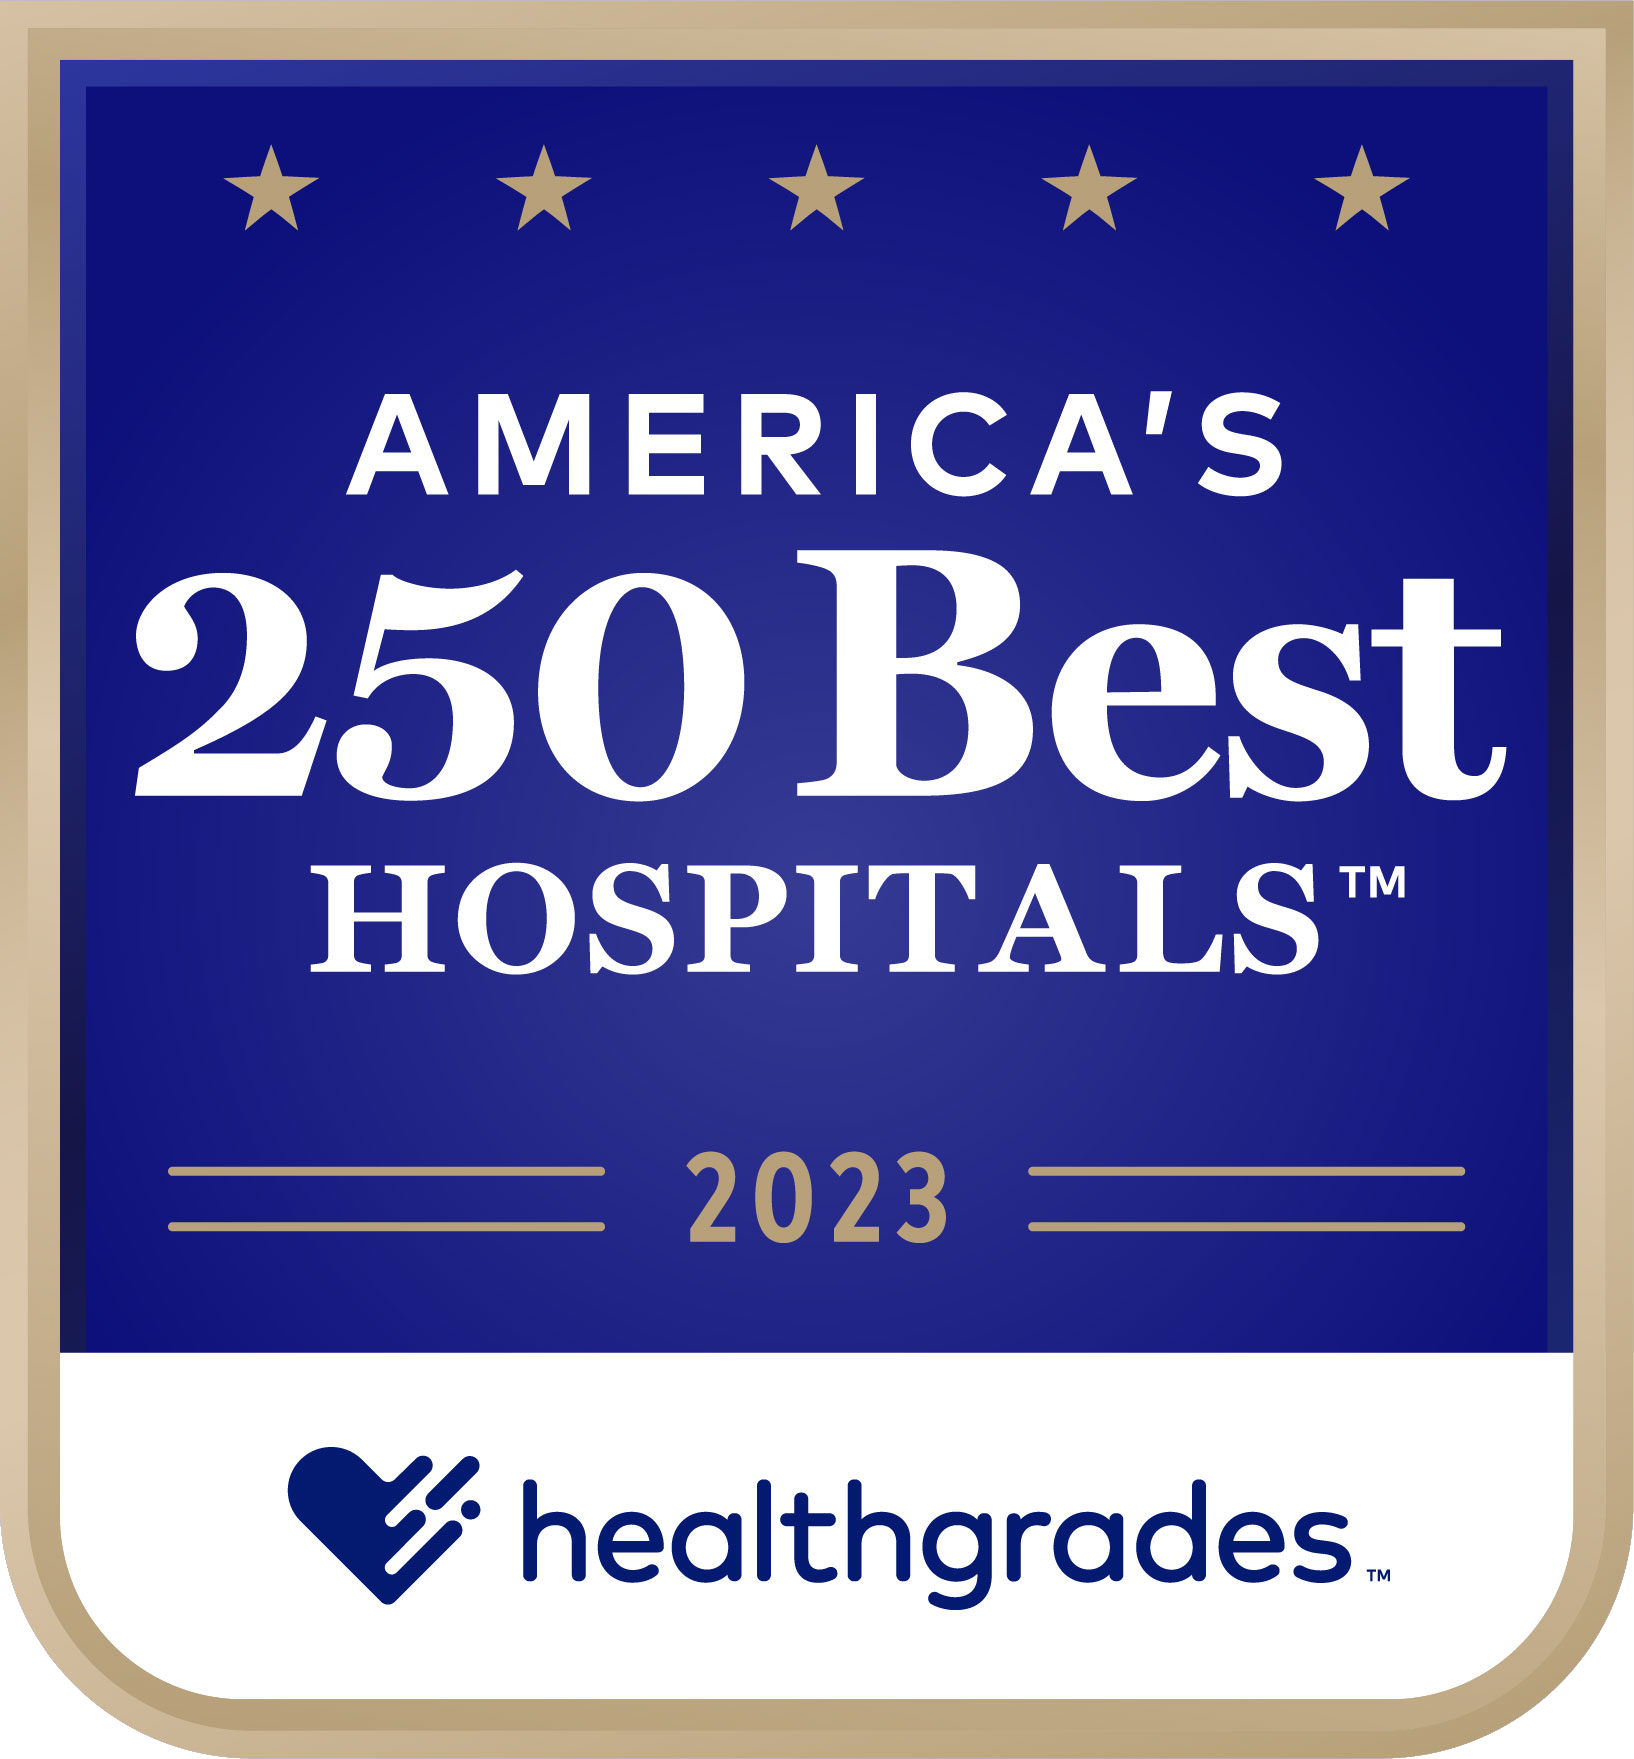 America's 250 Best Hospitals